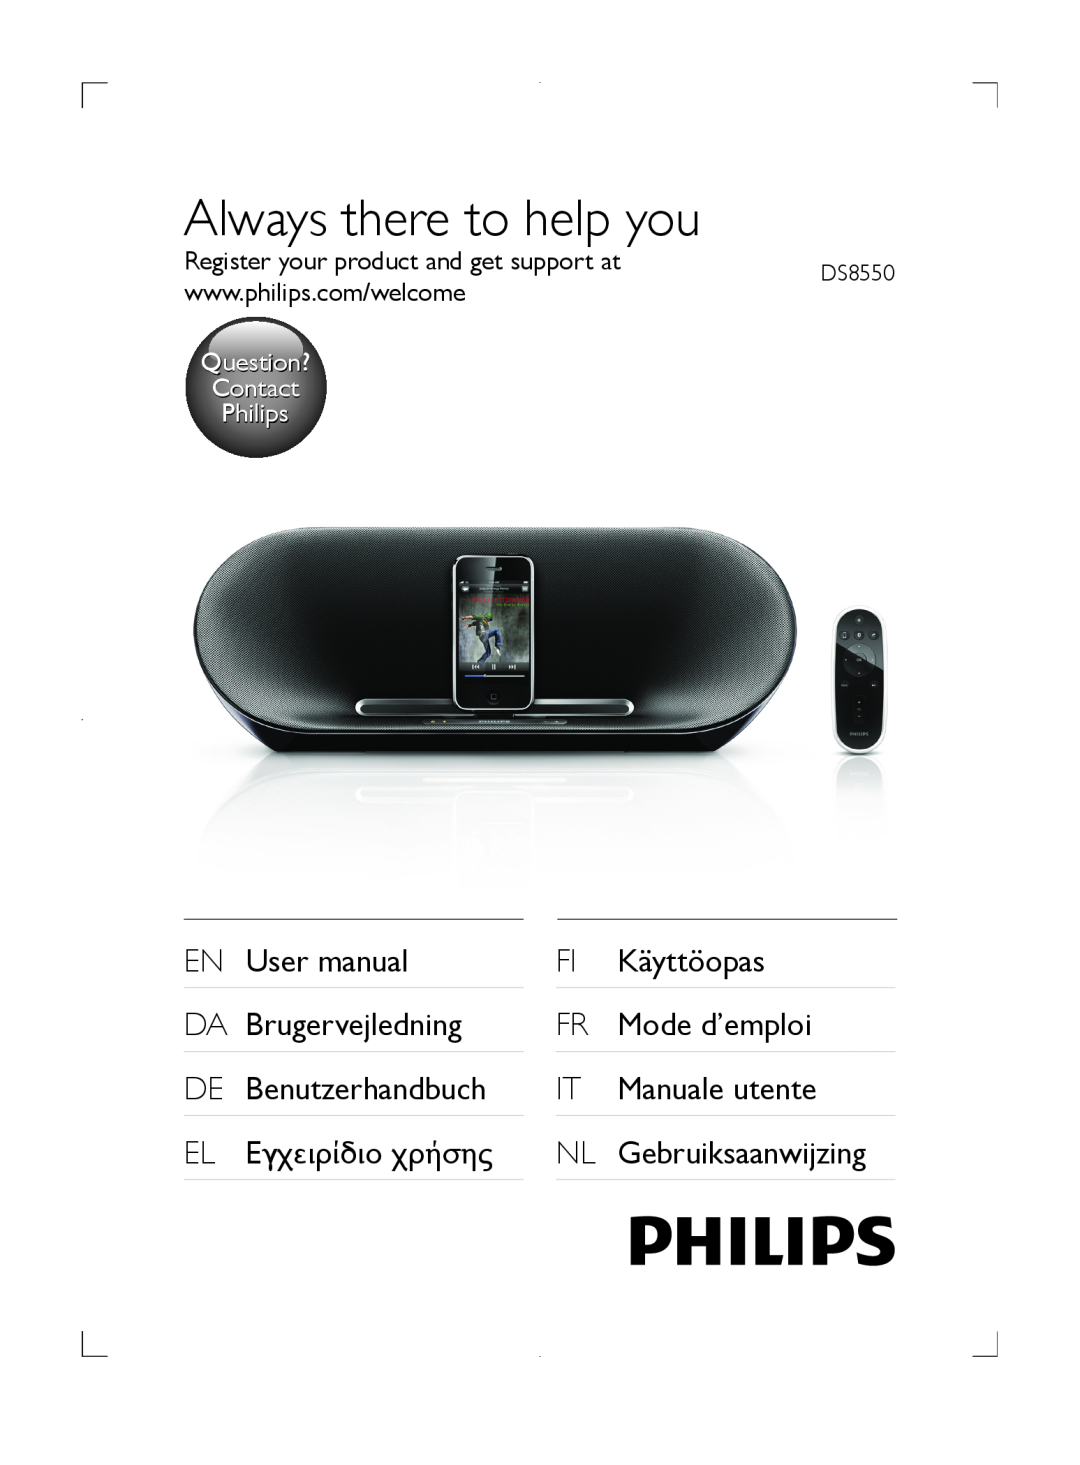 Philips DS8550 user manual Always there to help you, EN User manual DA Brugervejledning, NL Gebruiksaanwijzing 